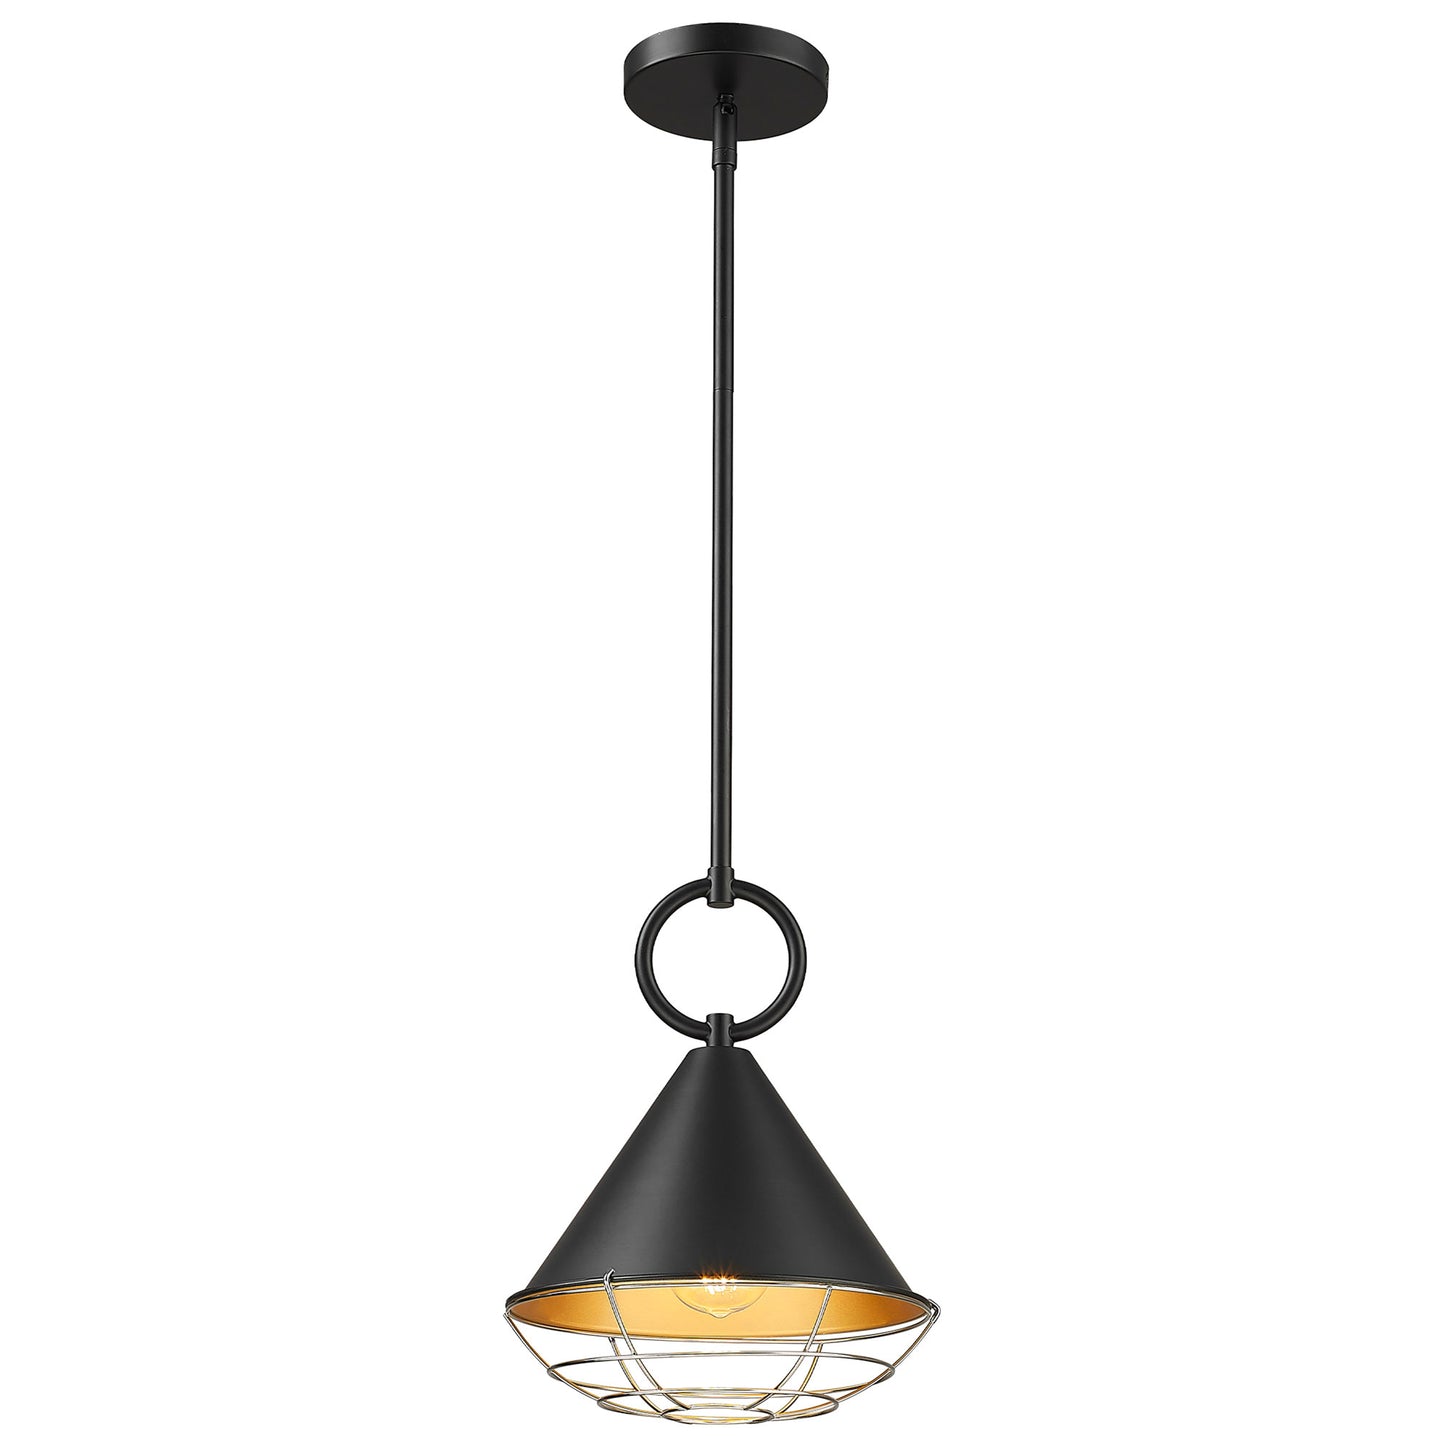 
                  
                    Emliviar Farmhouse Modern Pendant Light 9.6", 1-Light Rustic Hanging Lamp for Kitchen Island, Metal Dome Shade in Black Finish, YSE278MIL BK
                  
                